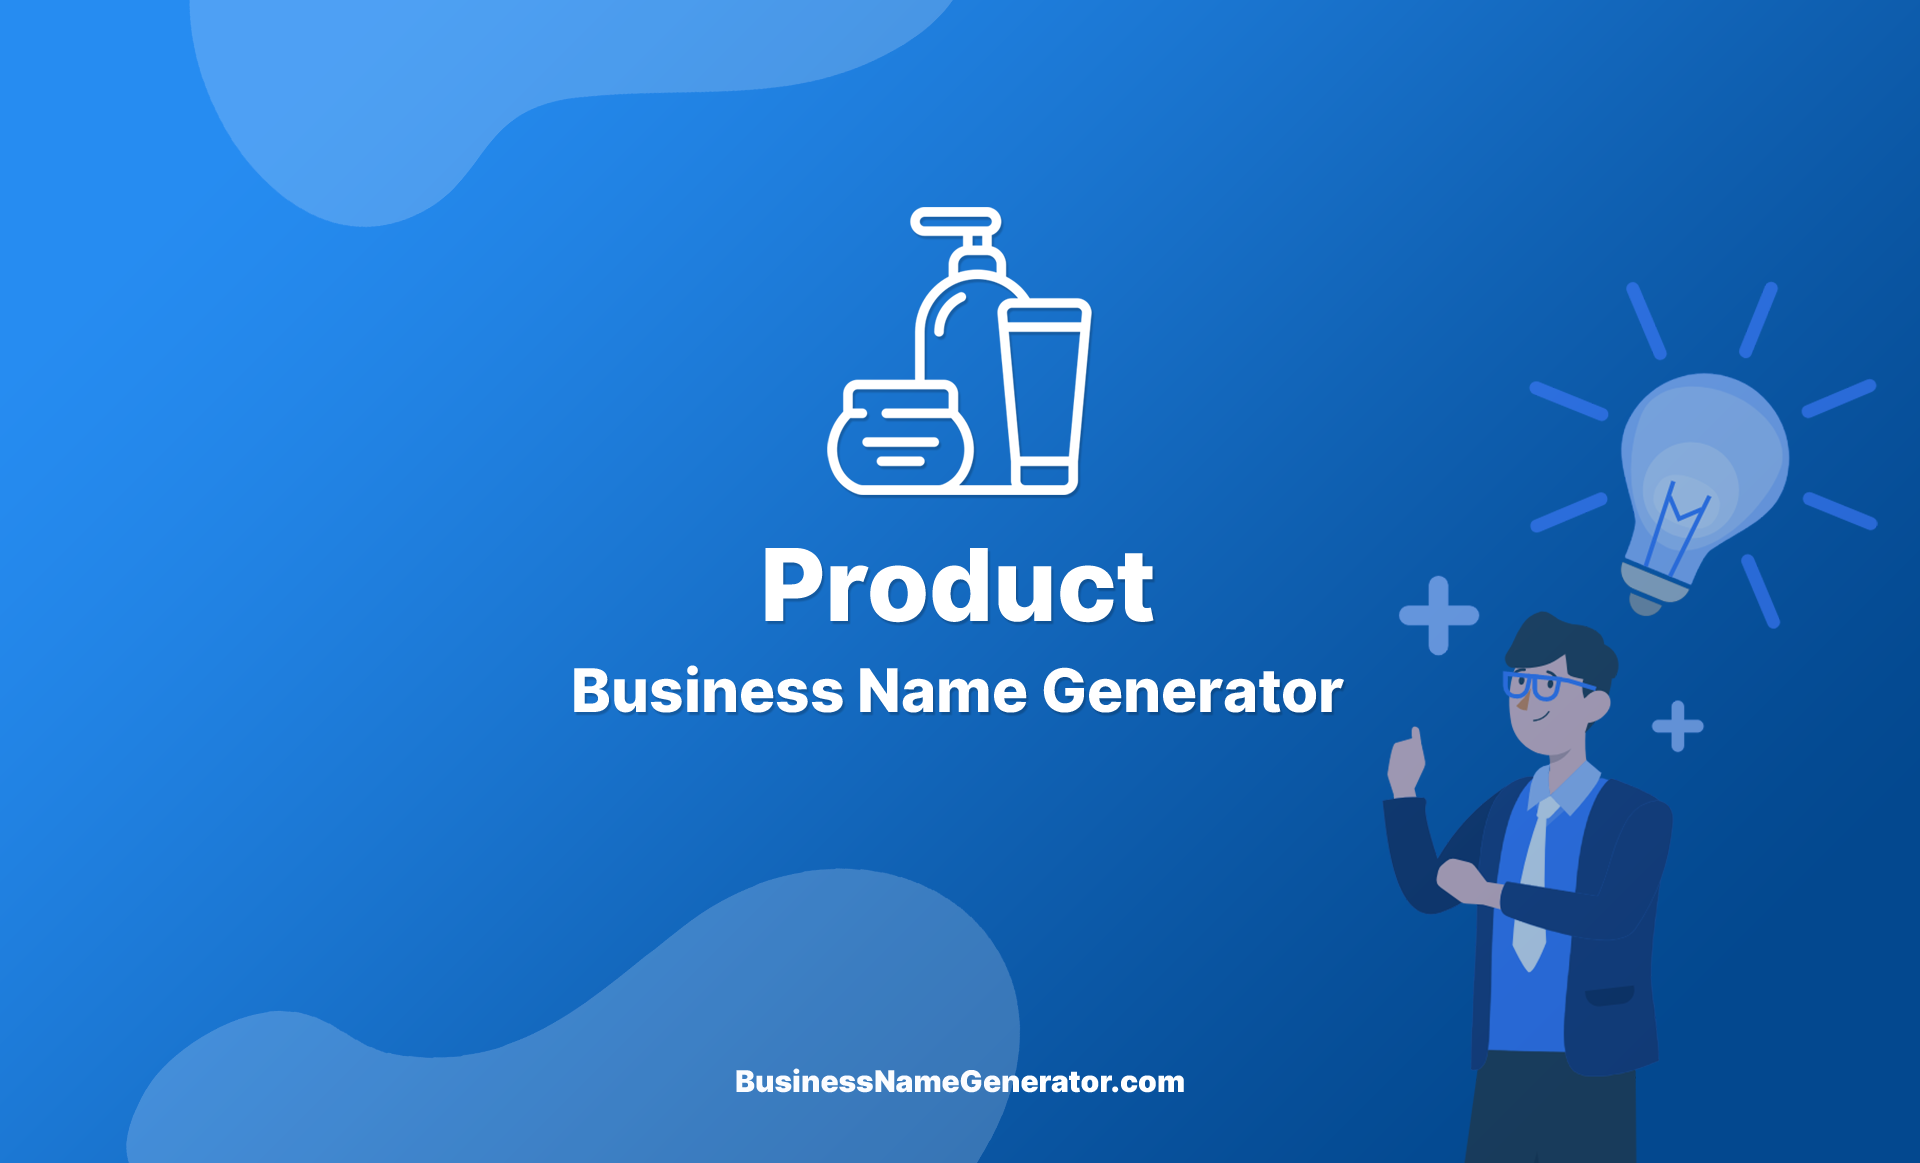 240 Product Name Ideas + Free Name Generator Tool